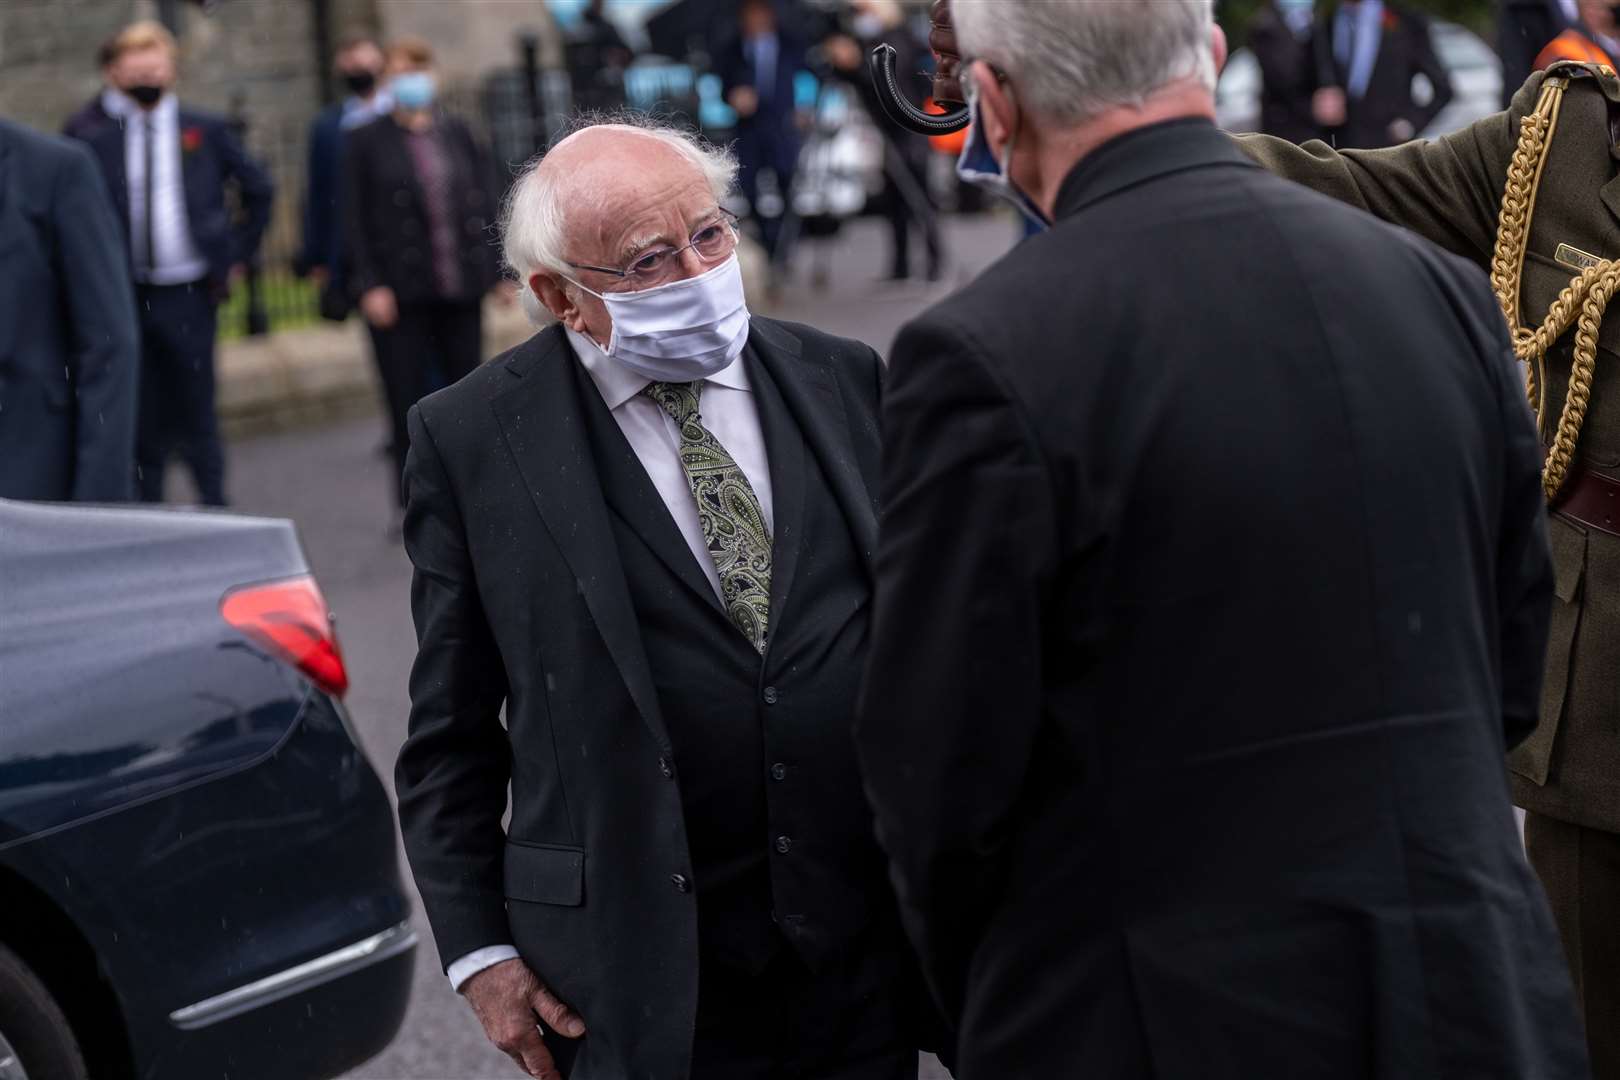 President Michael D Higgins arrives for the funeral (Stephen Latimer/PA)